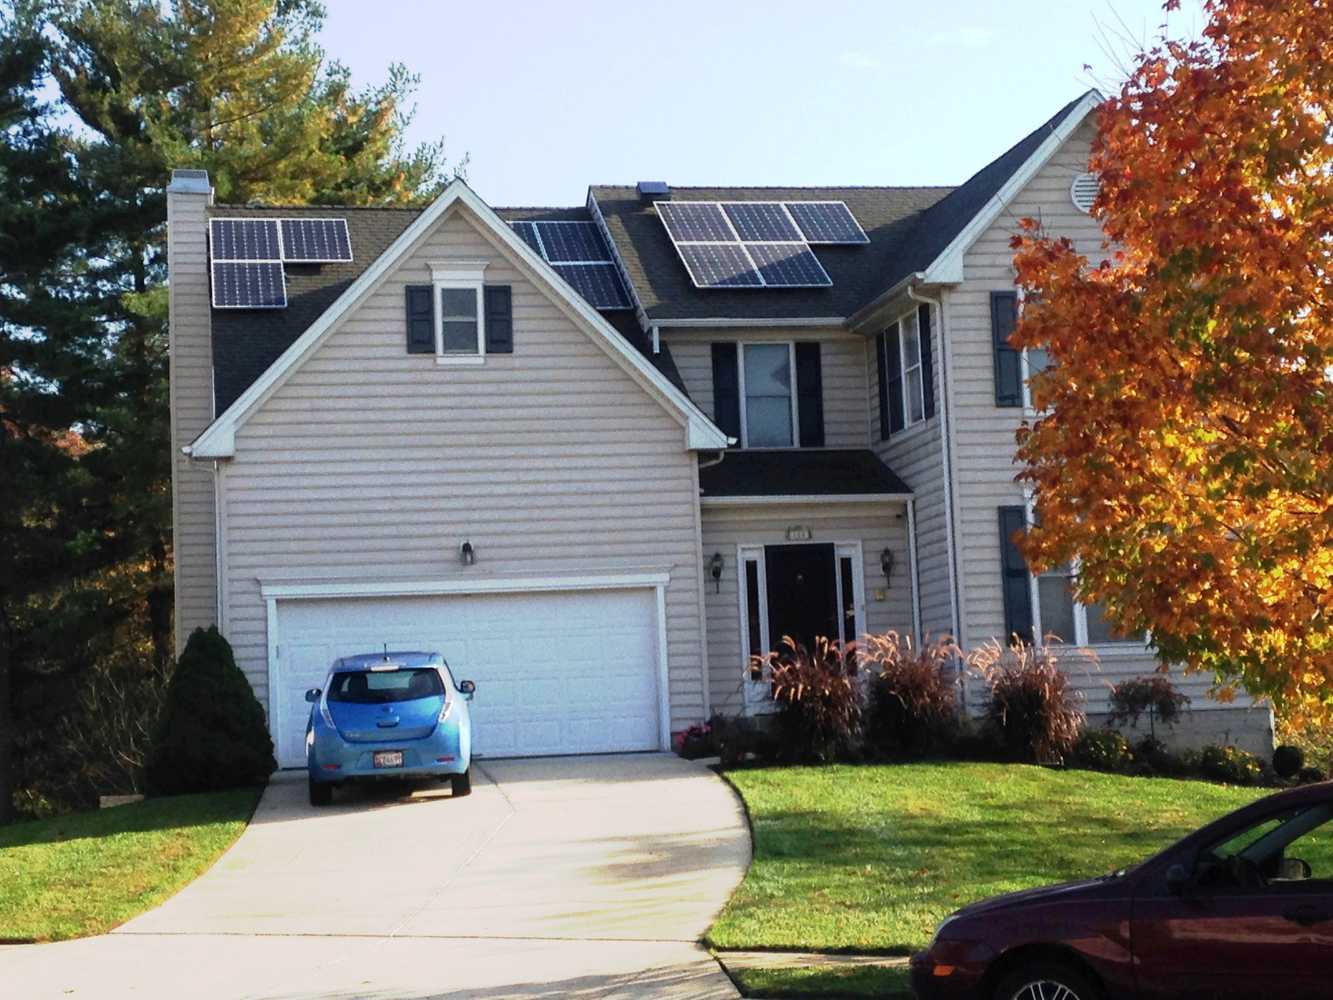 More residential solar installations